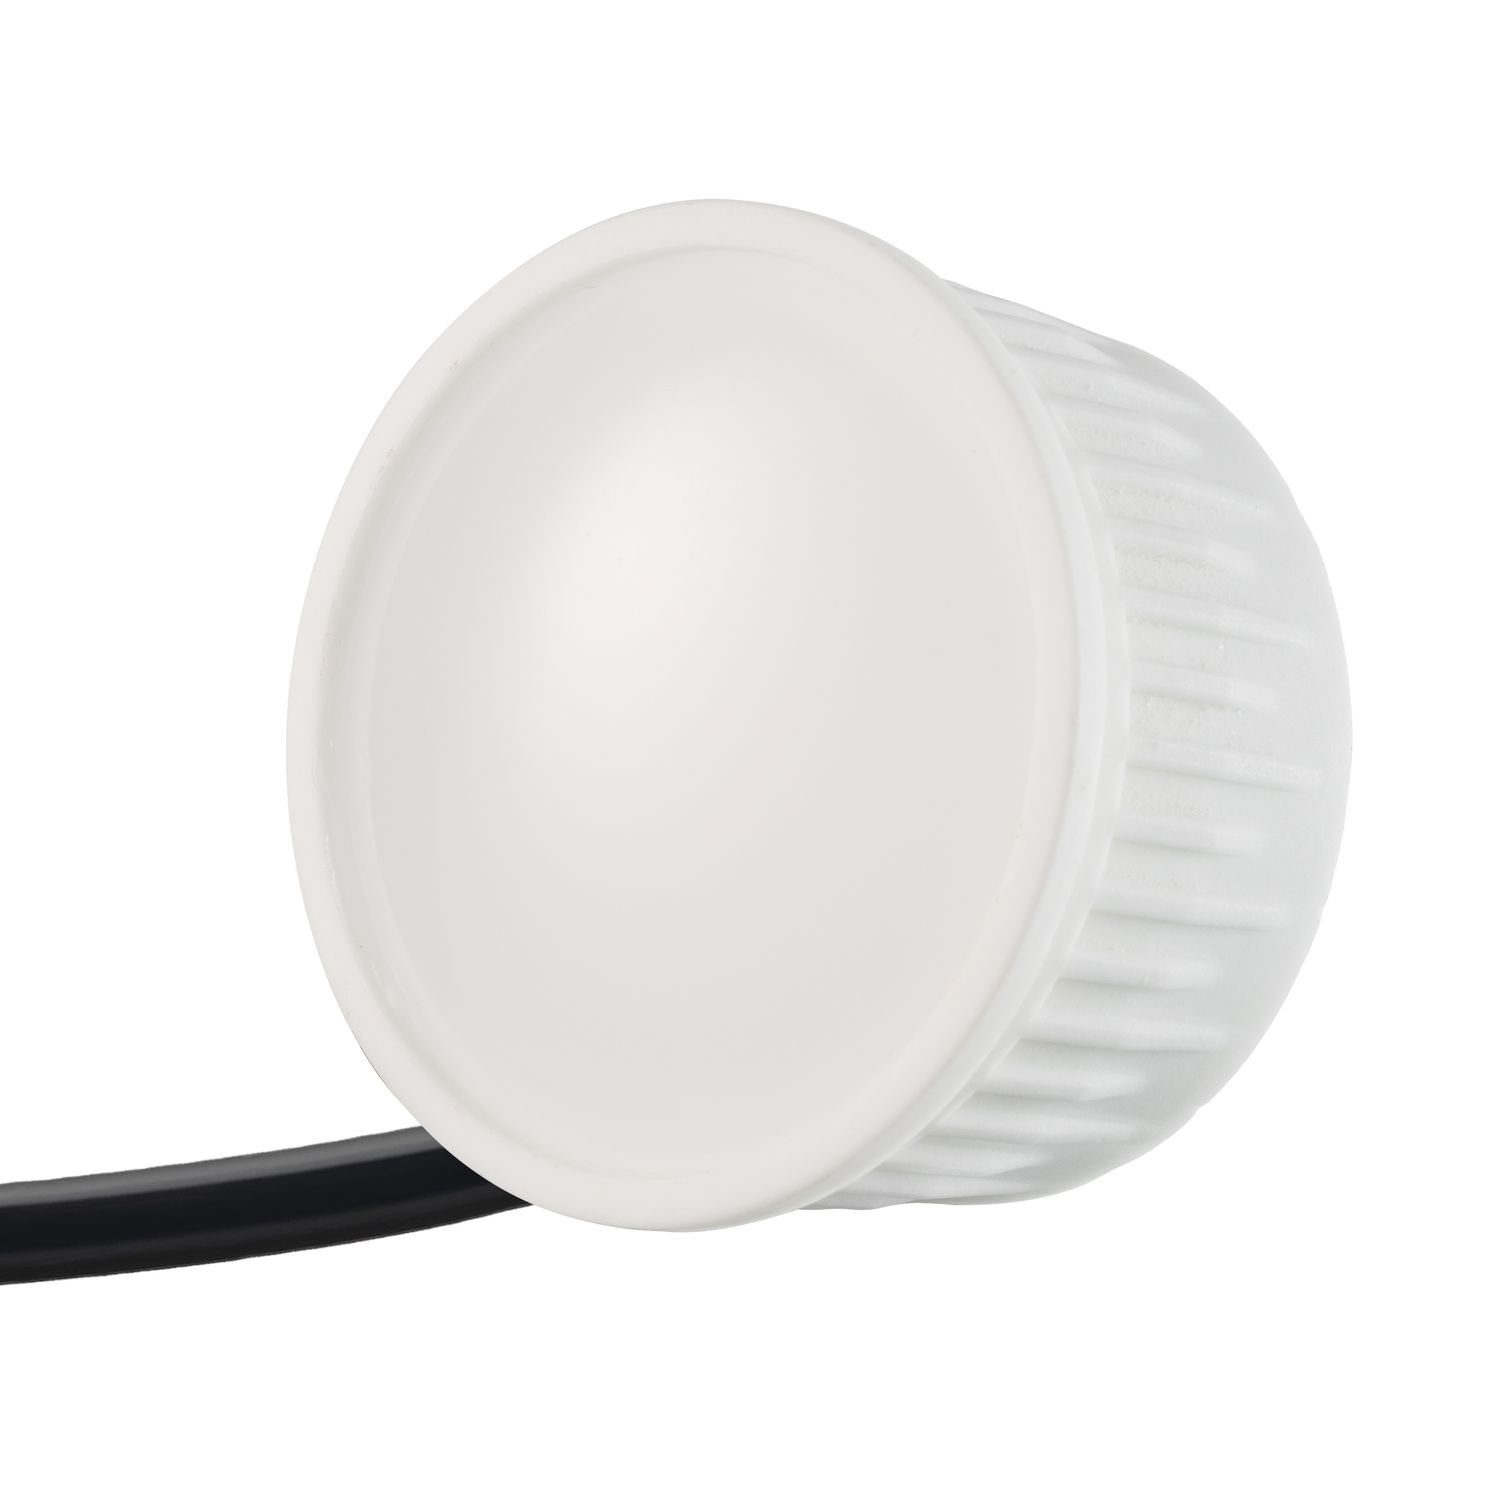 LEDANDO LED Einbaustrahler Einbaustrahler Set mit flach weiß vo in 5W extra LED 10er Leuchtmittel